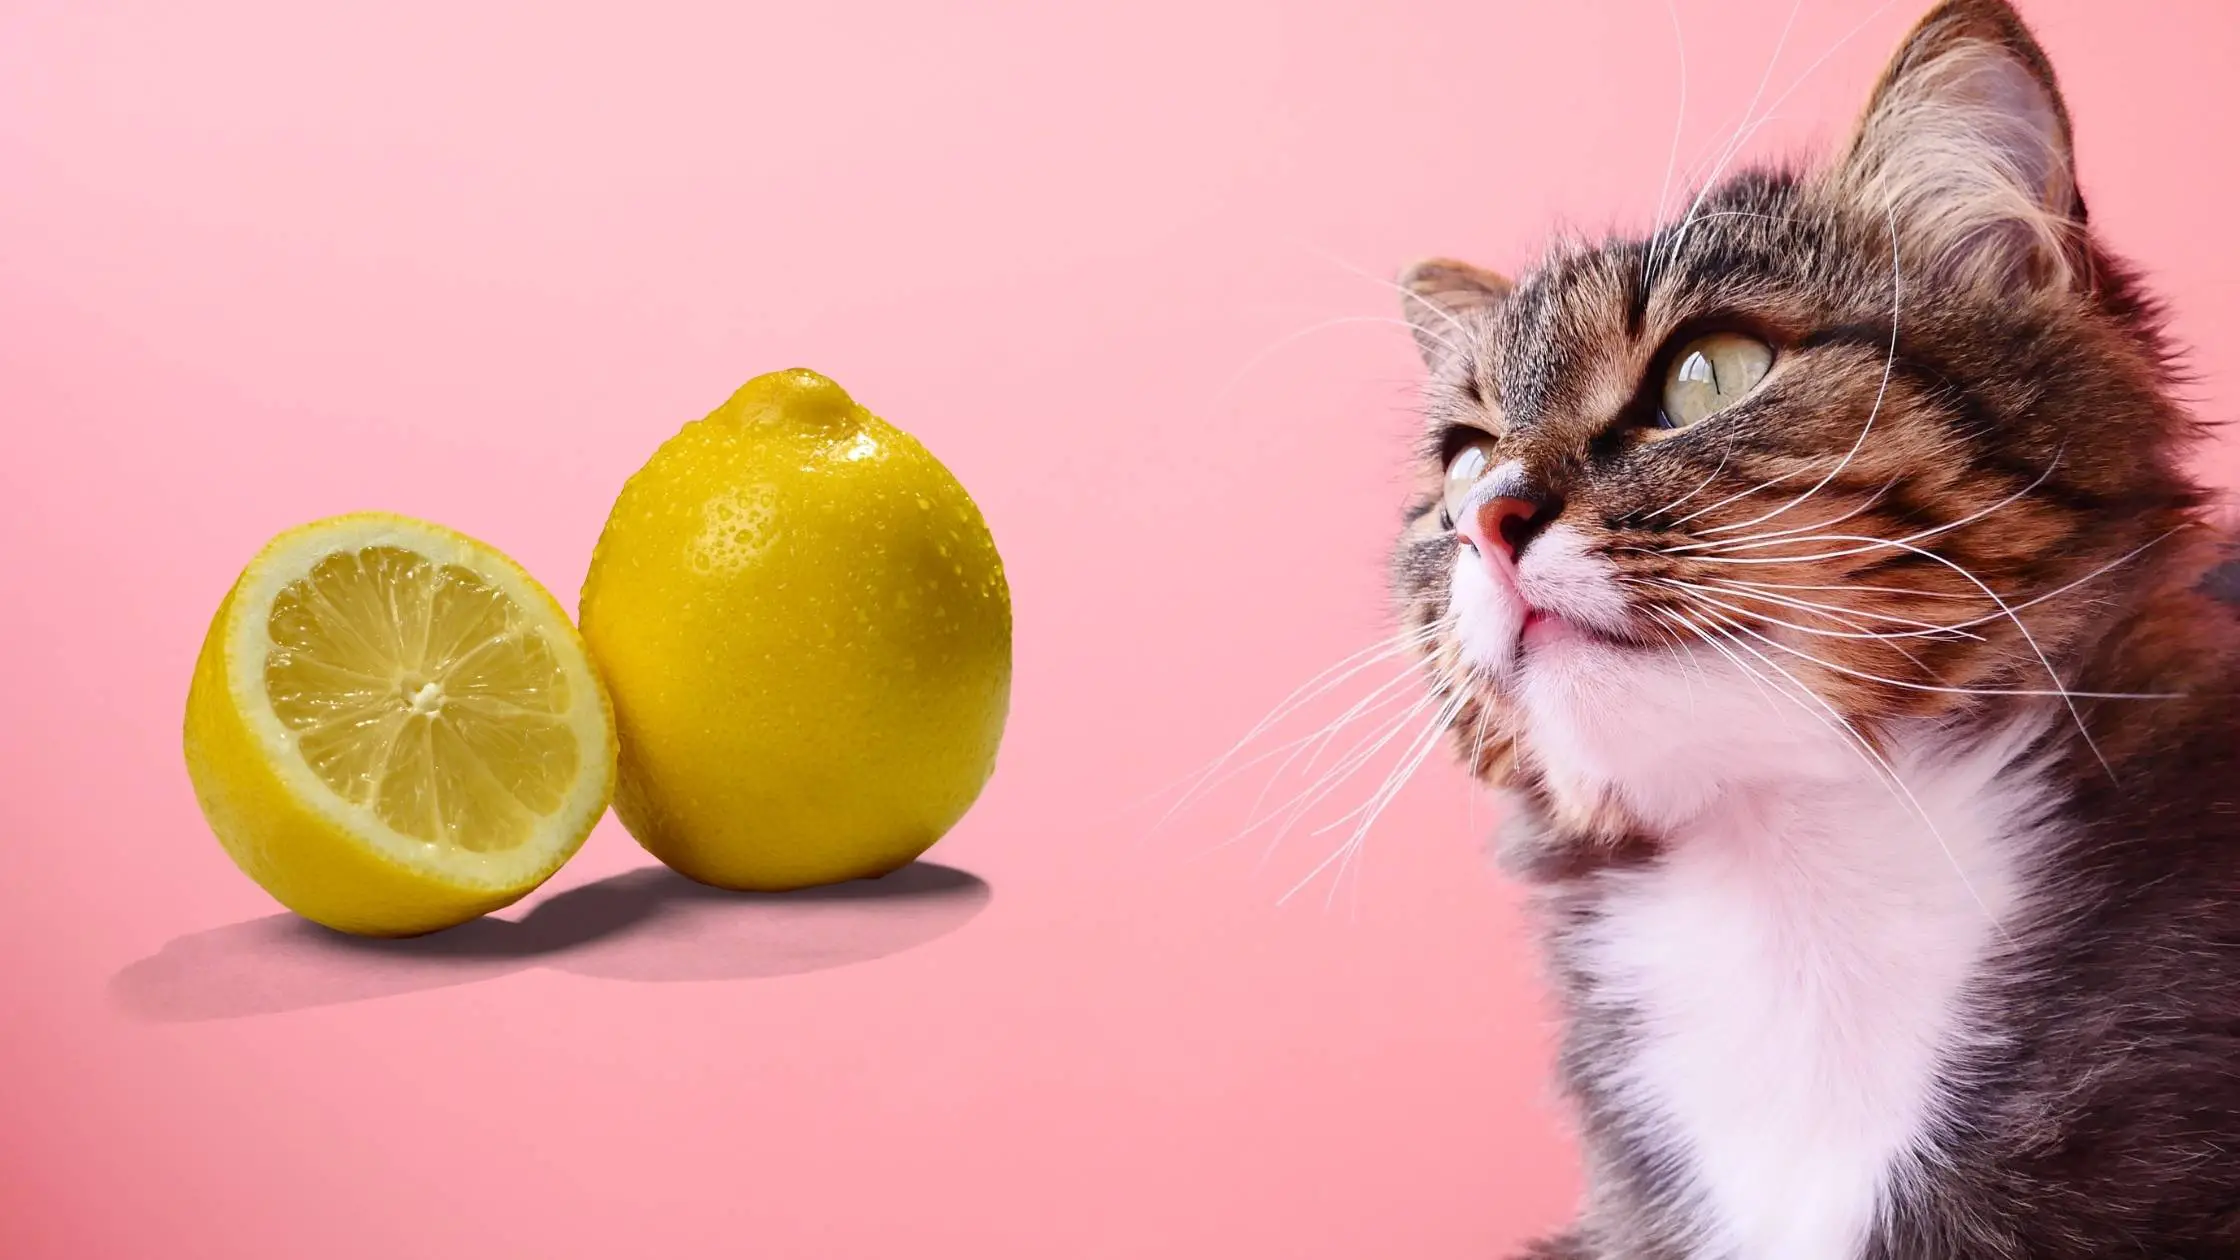 can cats eat lemon?